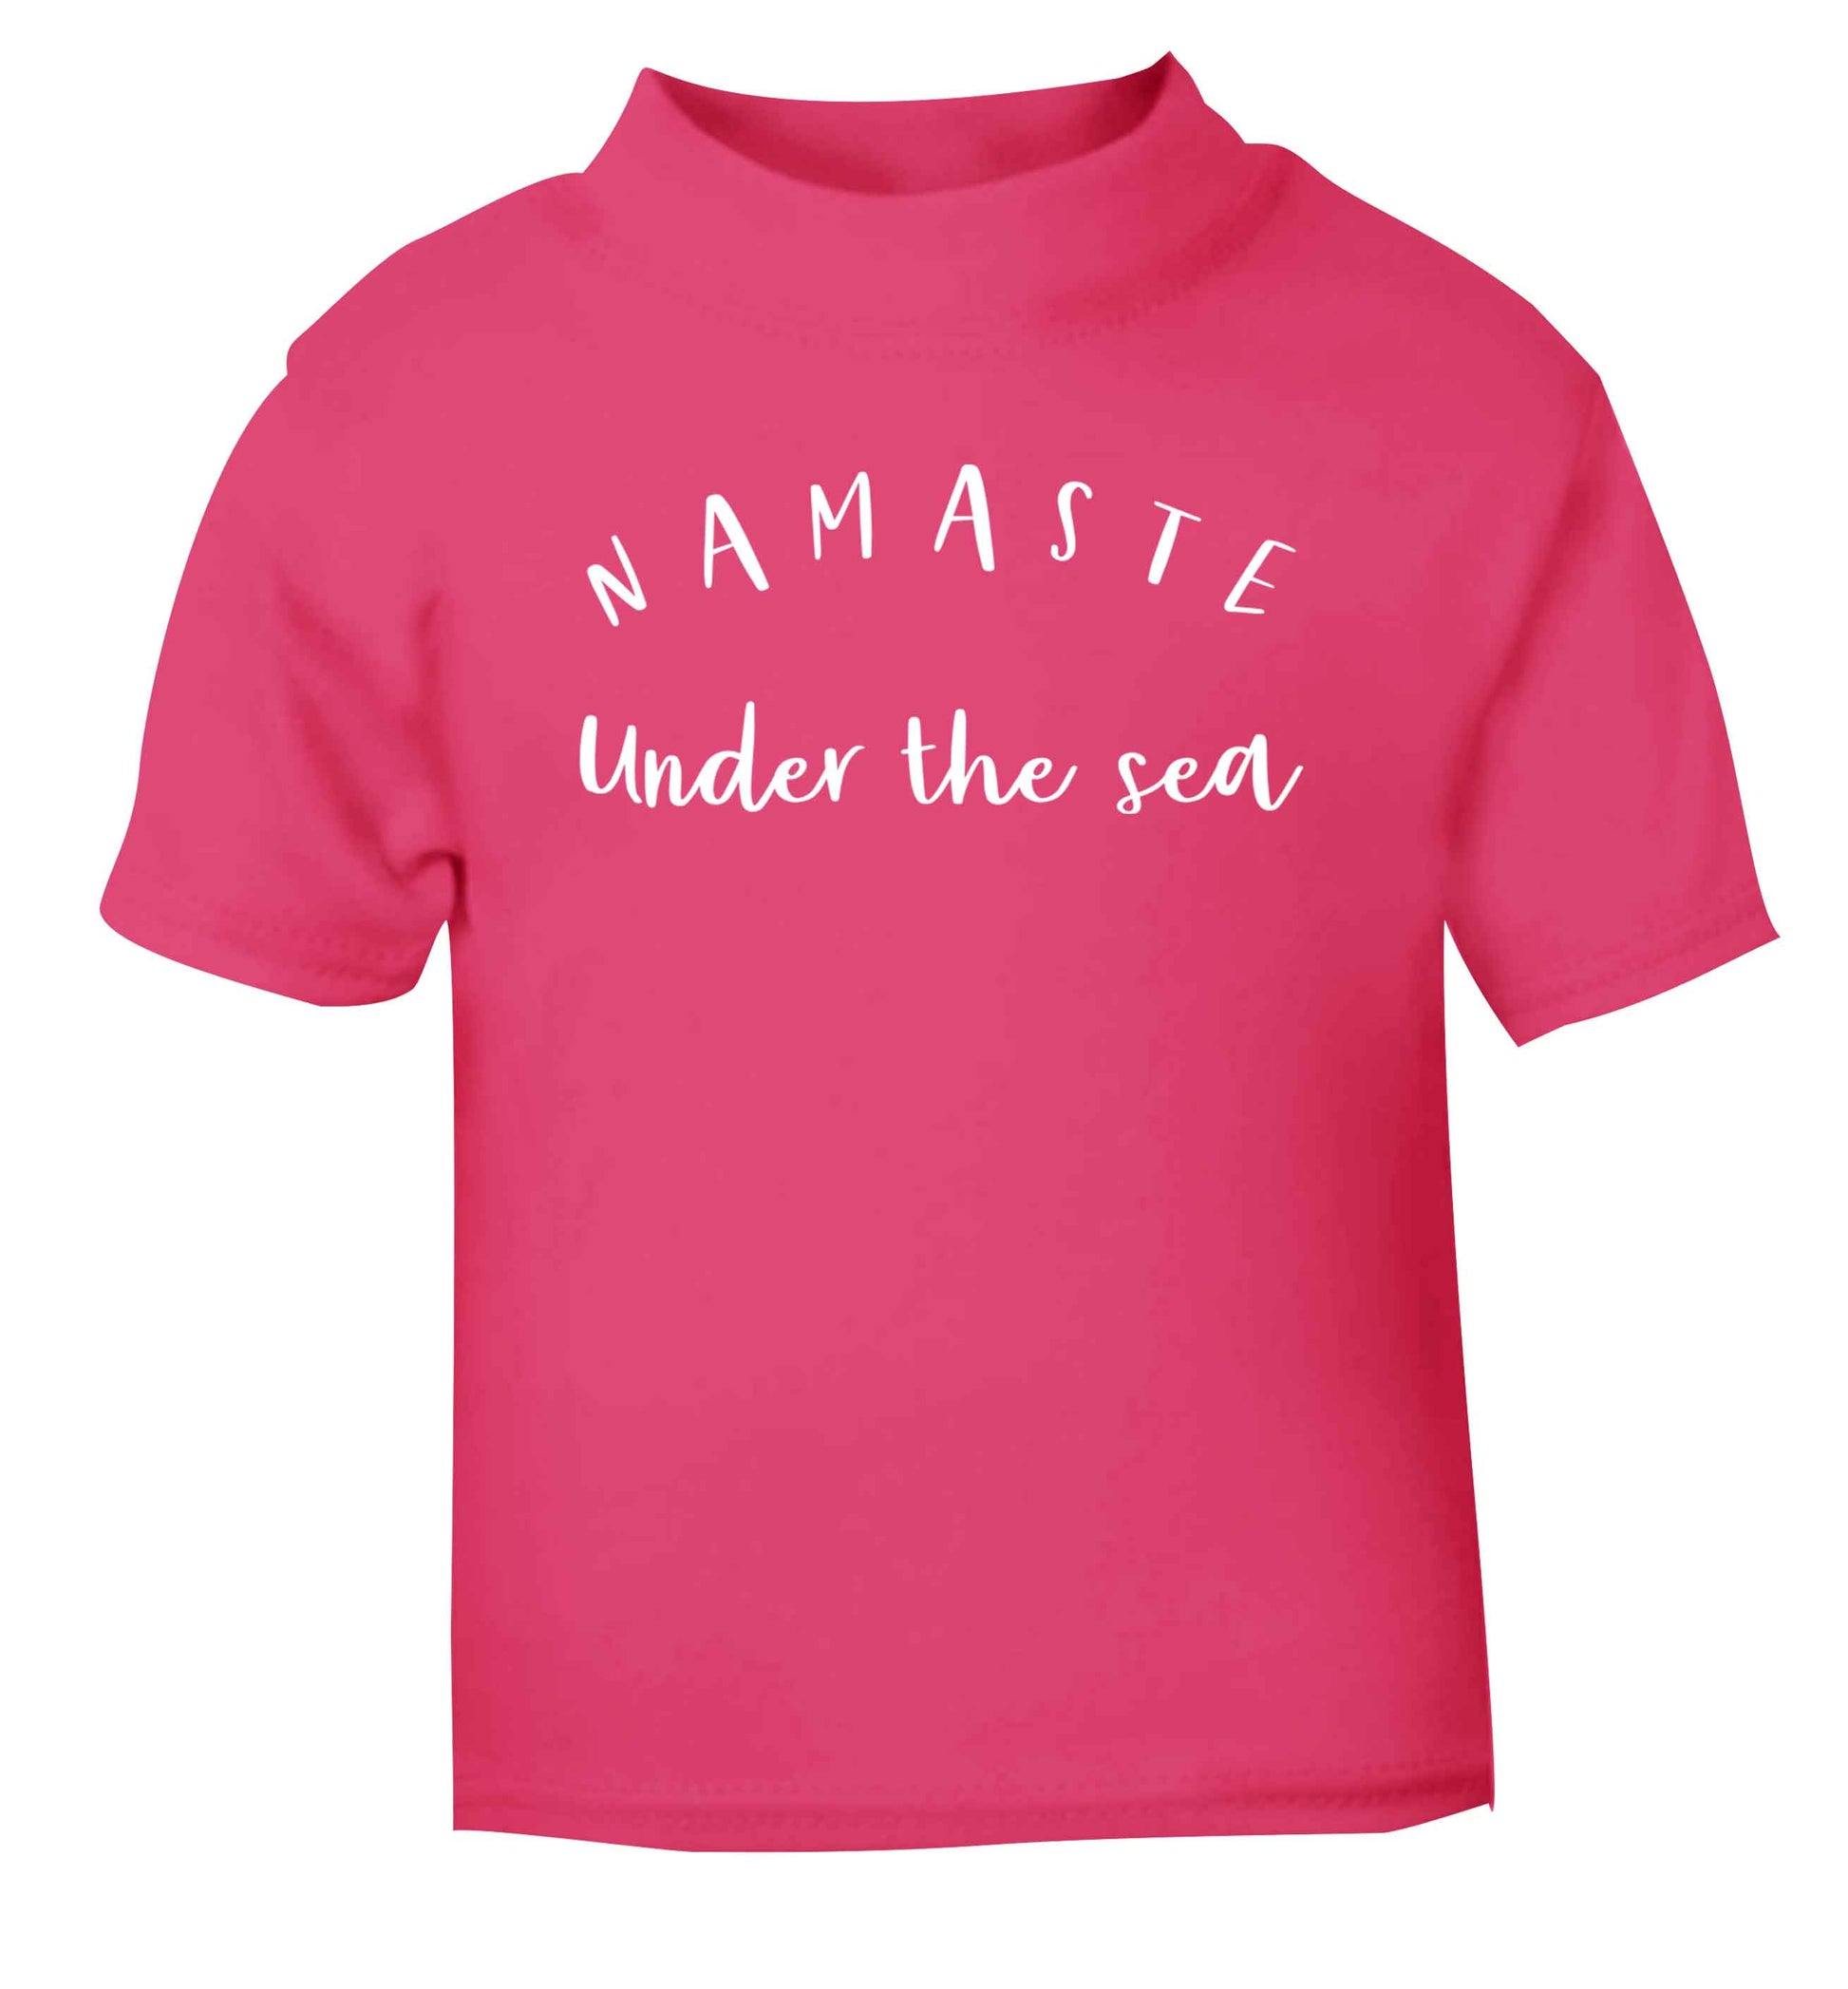 Namaste under the water pink Baby Toddler Tshirt 2 Years